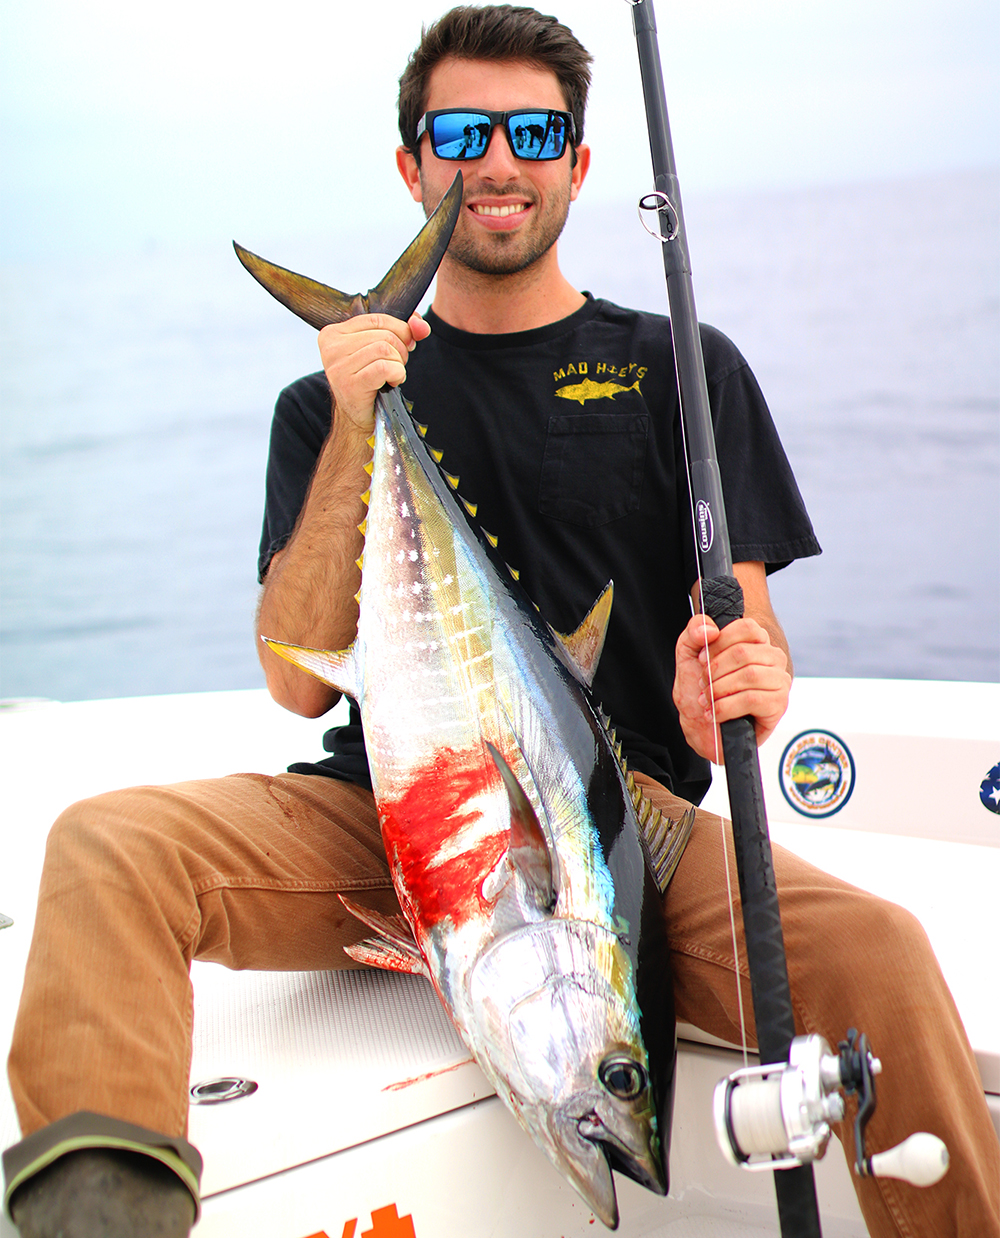 Pacific Coast Yellowfin Tuna Tips [Tips From Tuna Pros]